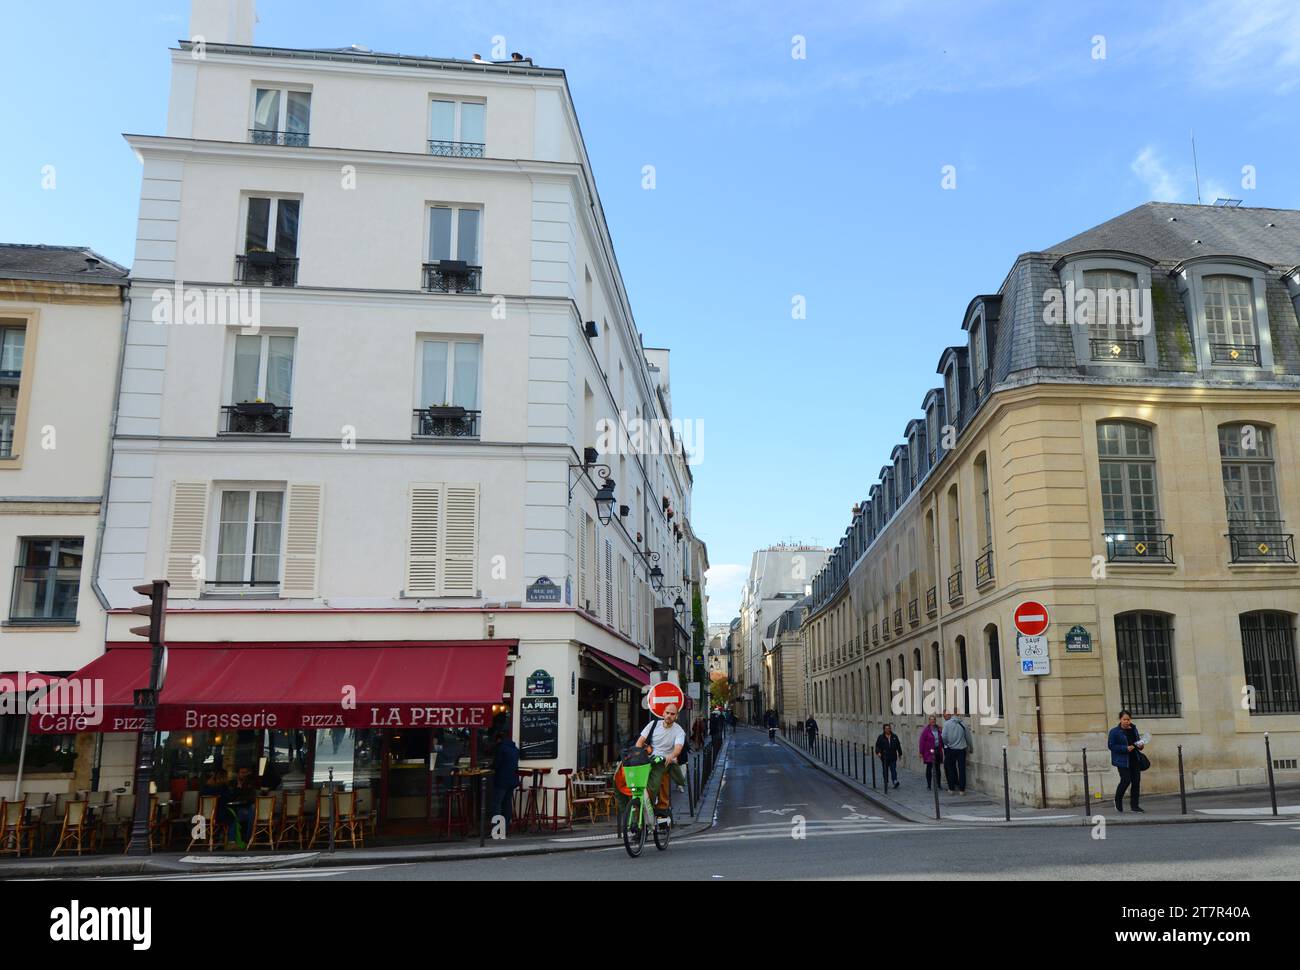 Brasserie La Perle on the corner of Rue Vieille-du-Temple and Rue De La Perle in Paris, France. Stock Photo